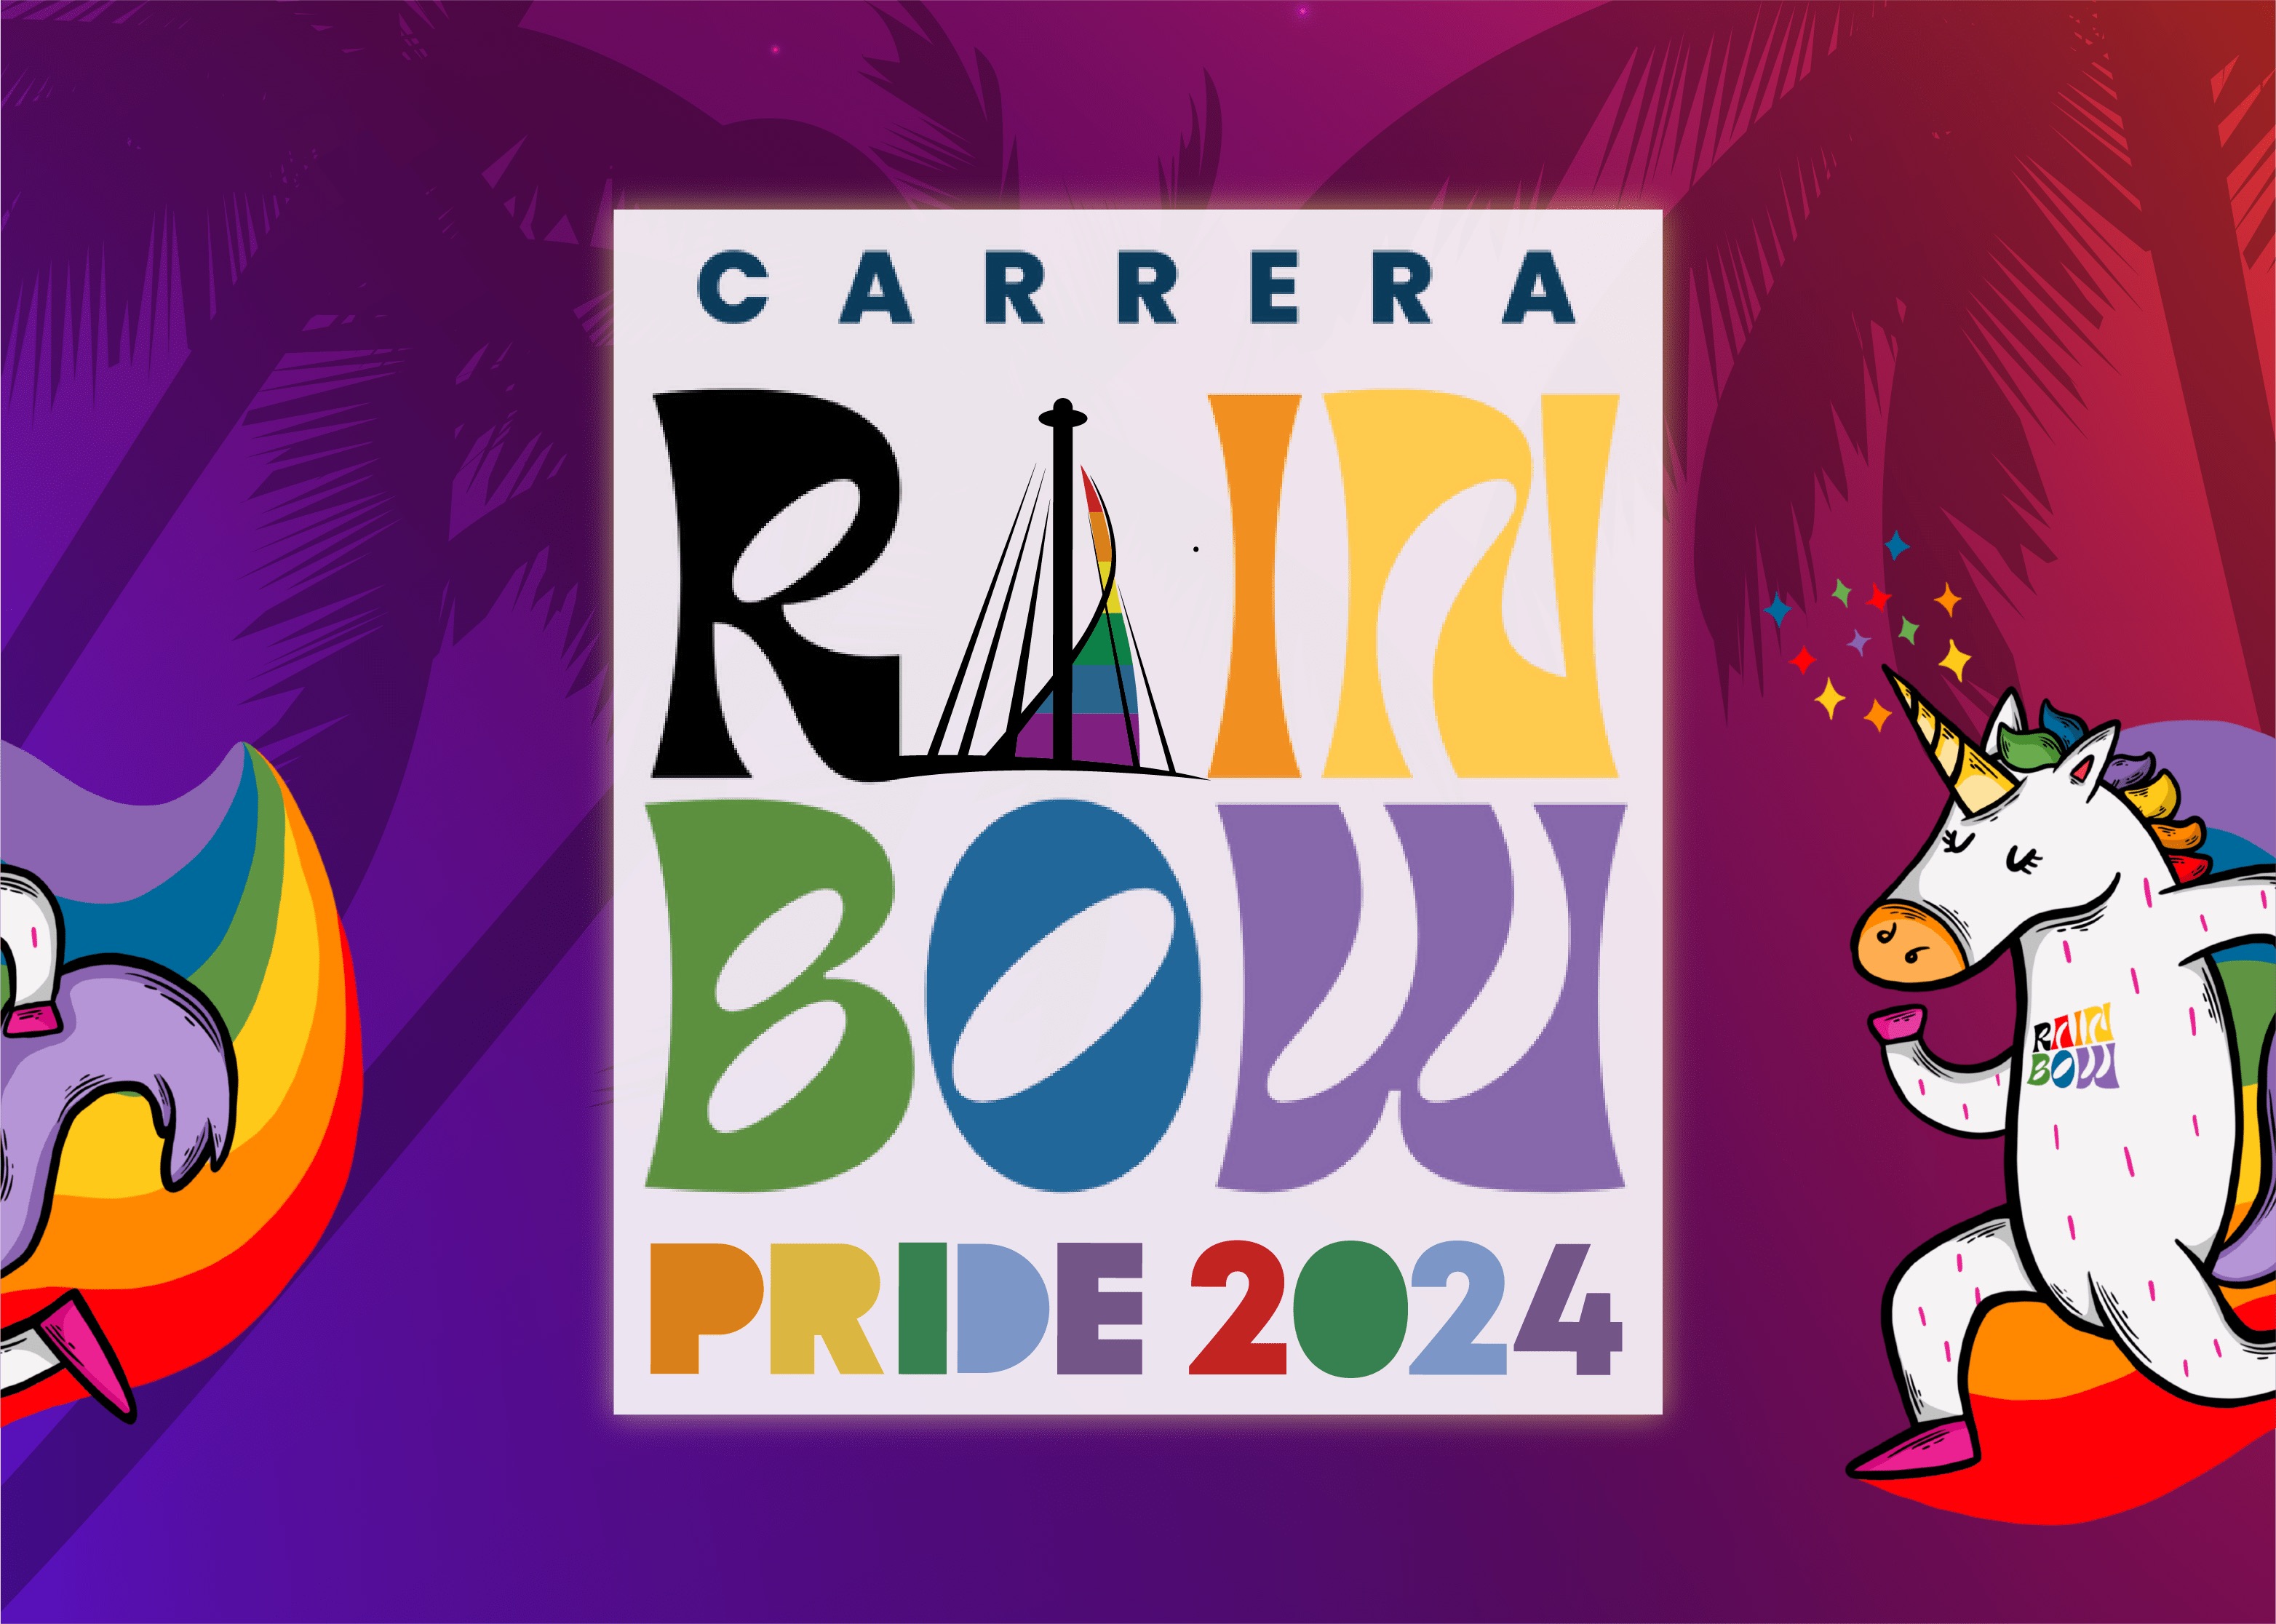 Carrera Rainbow Pride 2024